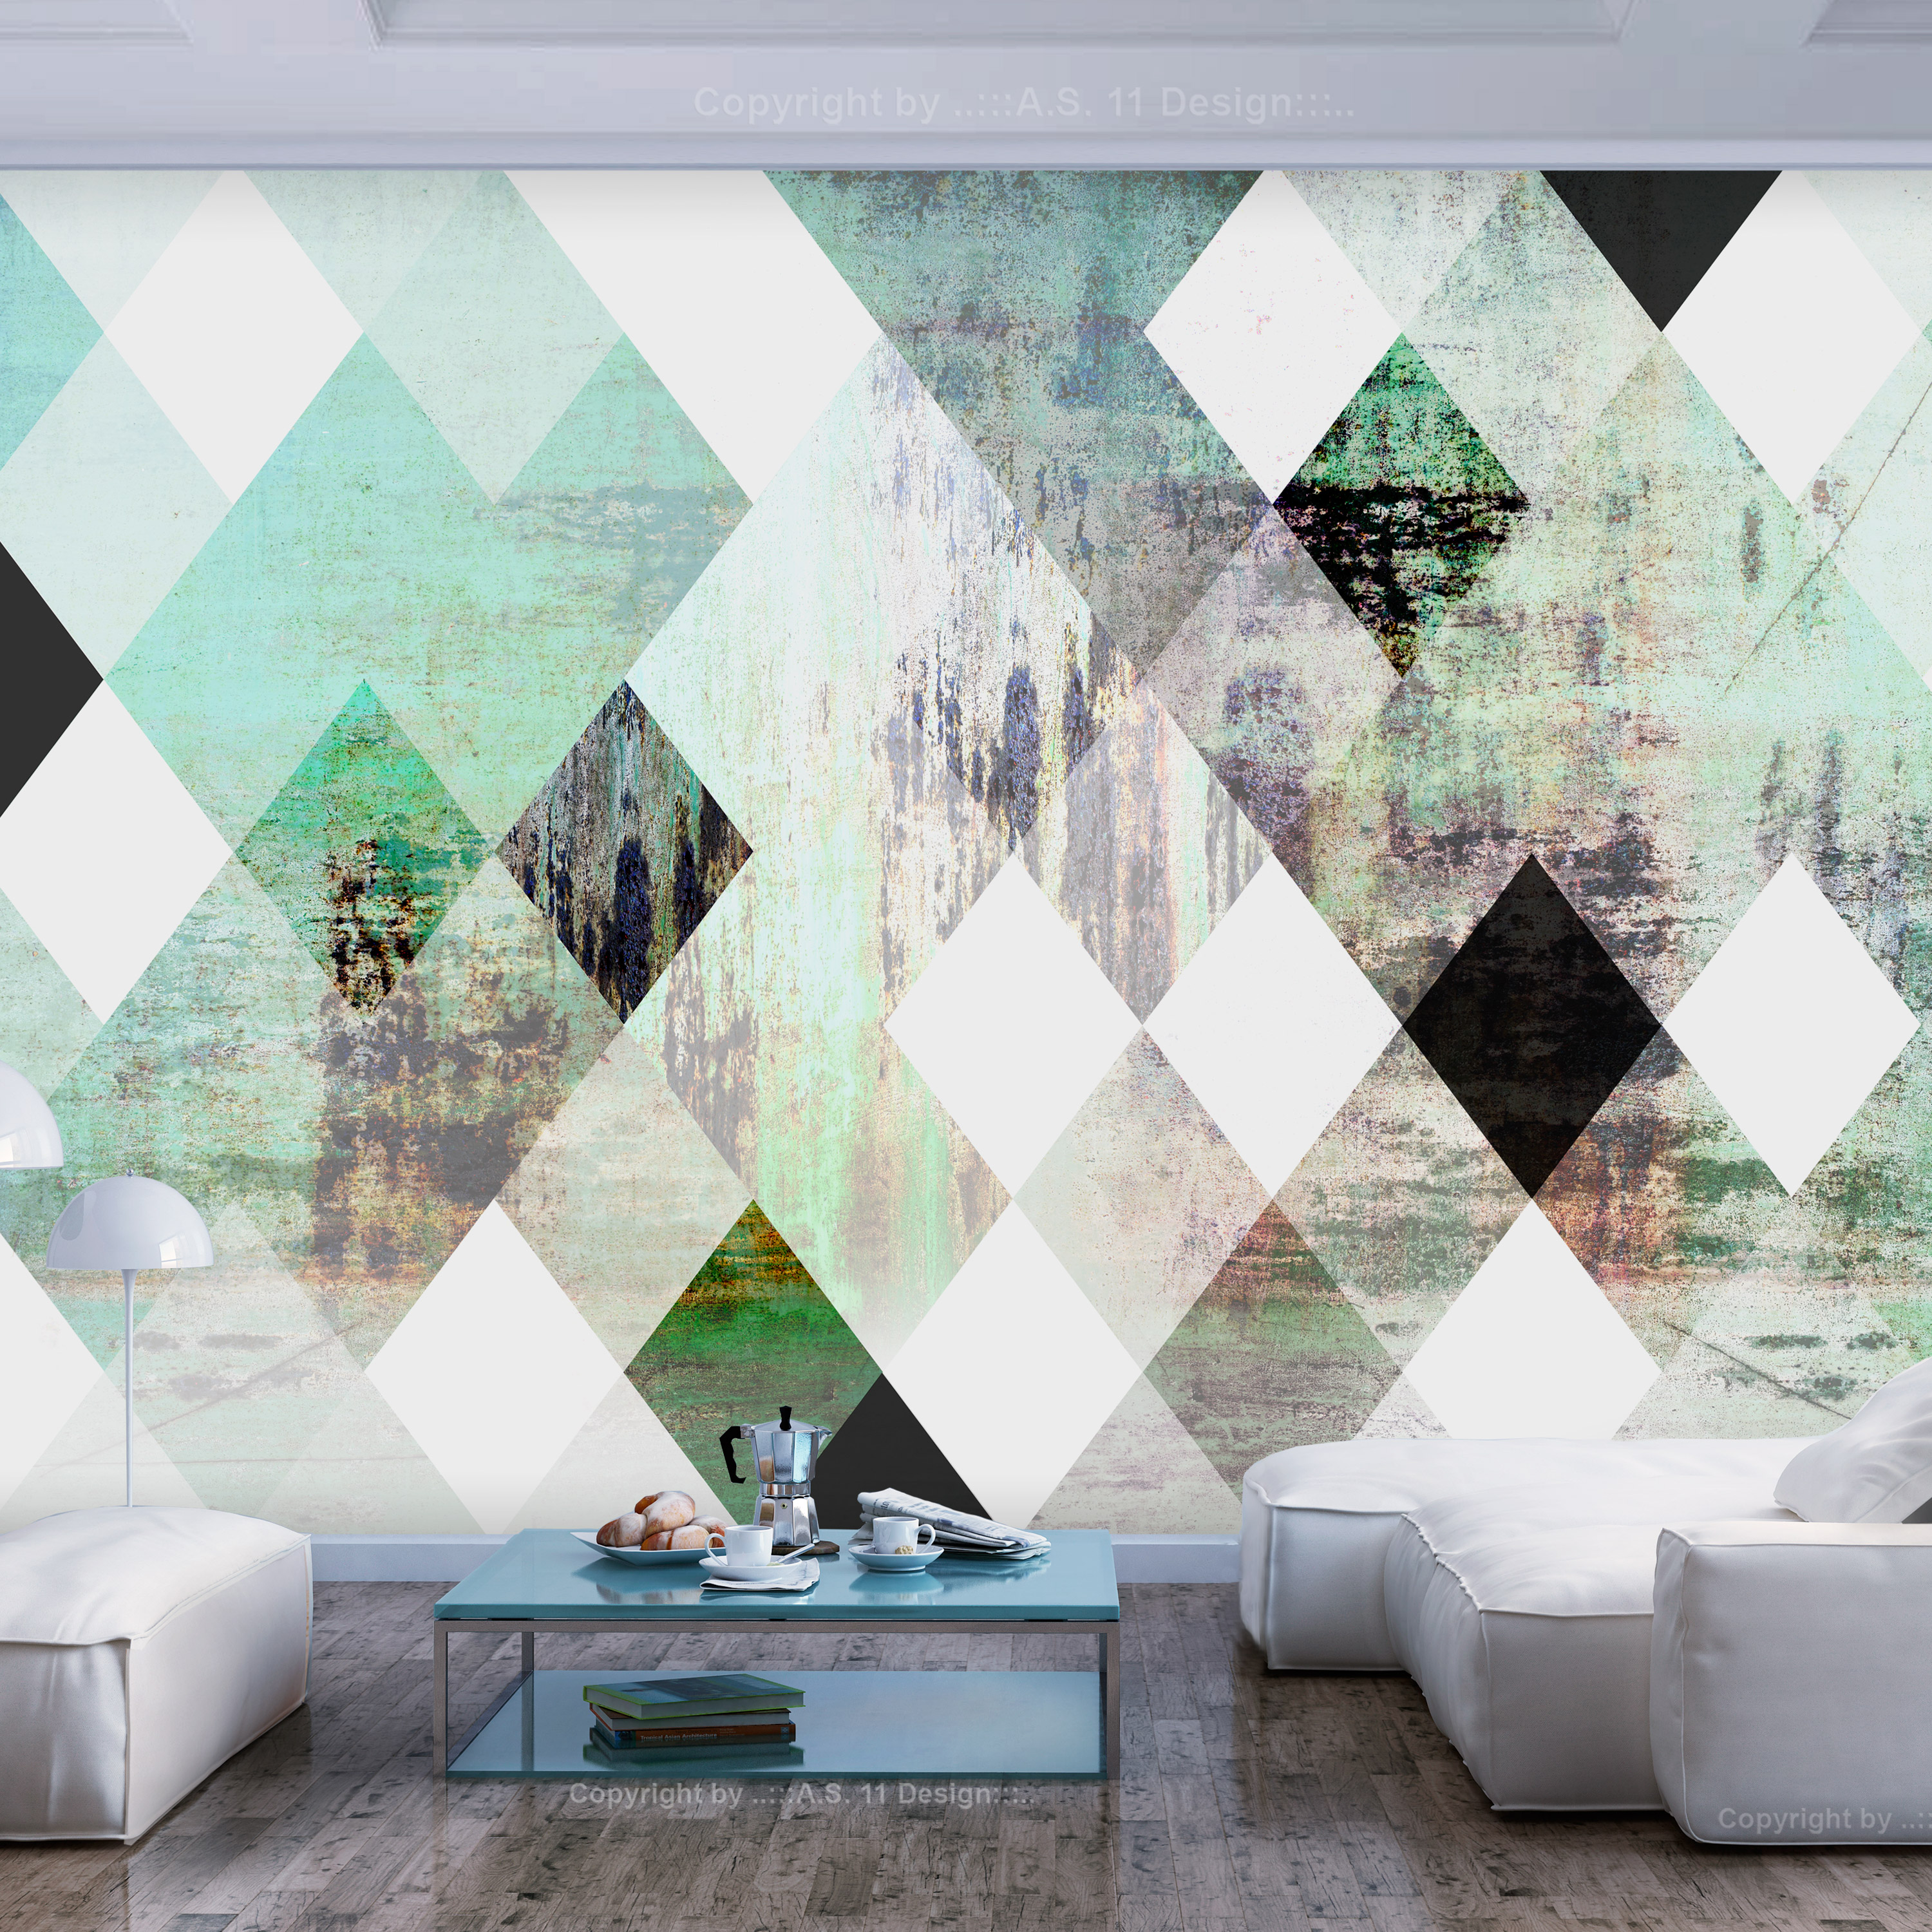 Self-adhesive Wallpaper - Rhombic Chessboard (Green) - 147x105